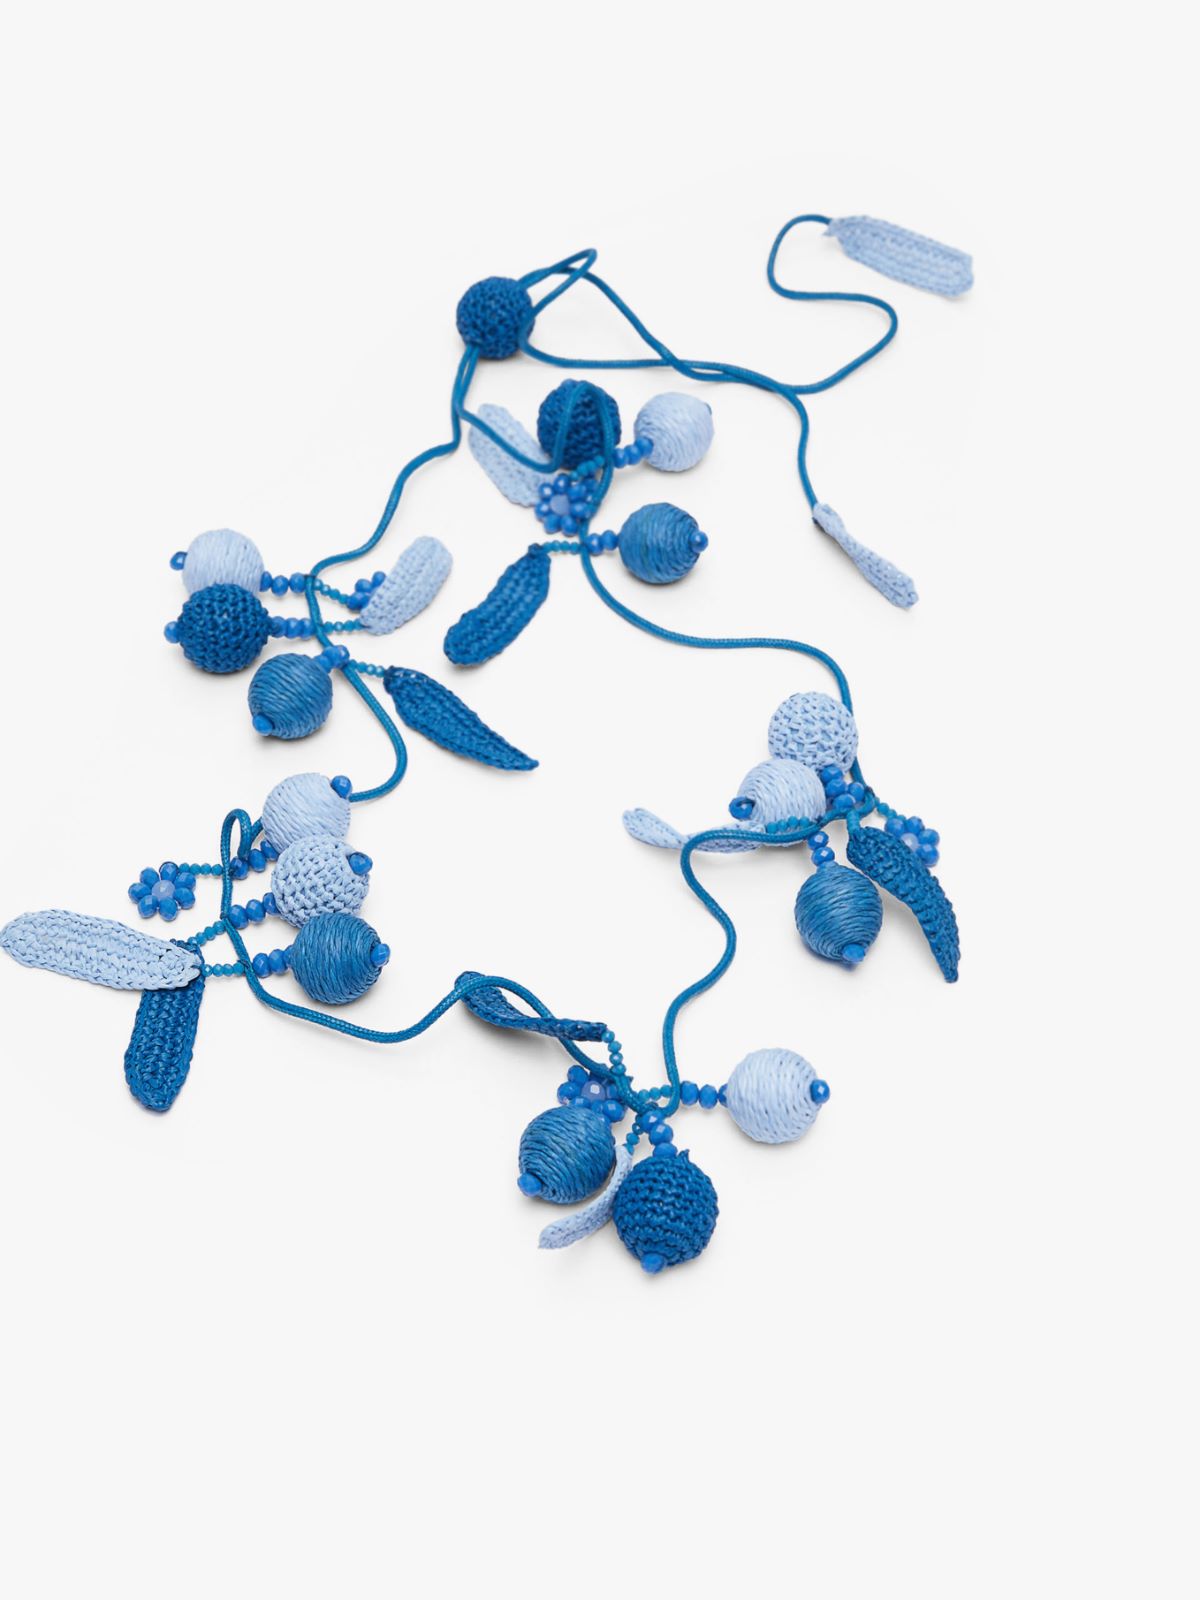 Paper yarn necklace - CORNFLOWER BLUE - Weekend Max Mara - 2